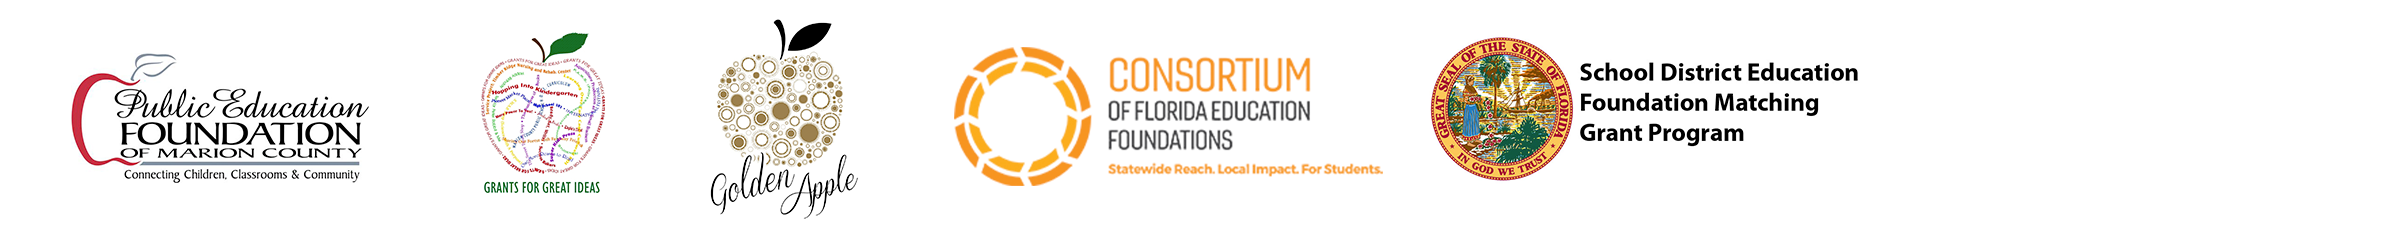 Public Education Foundation Portal logo